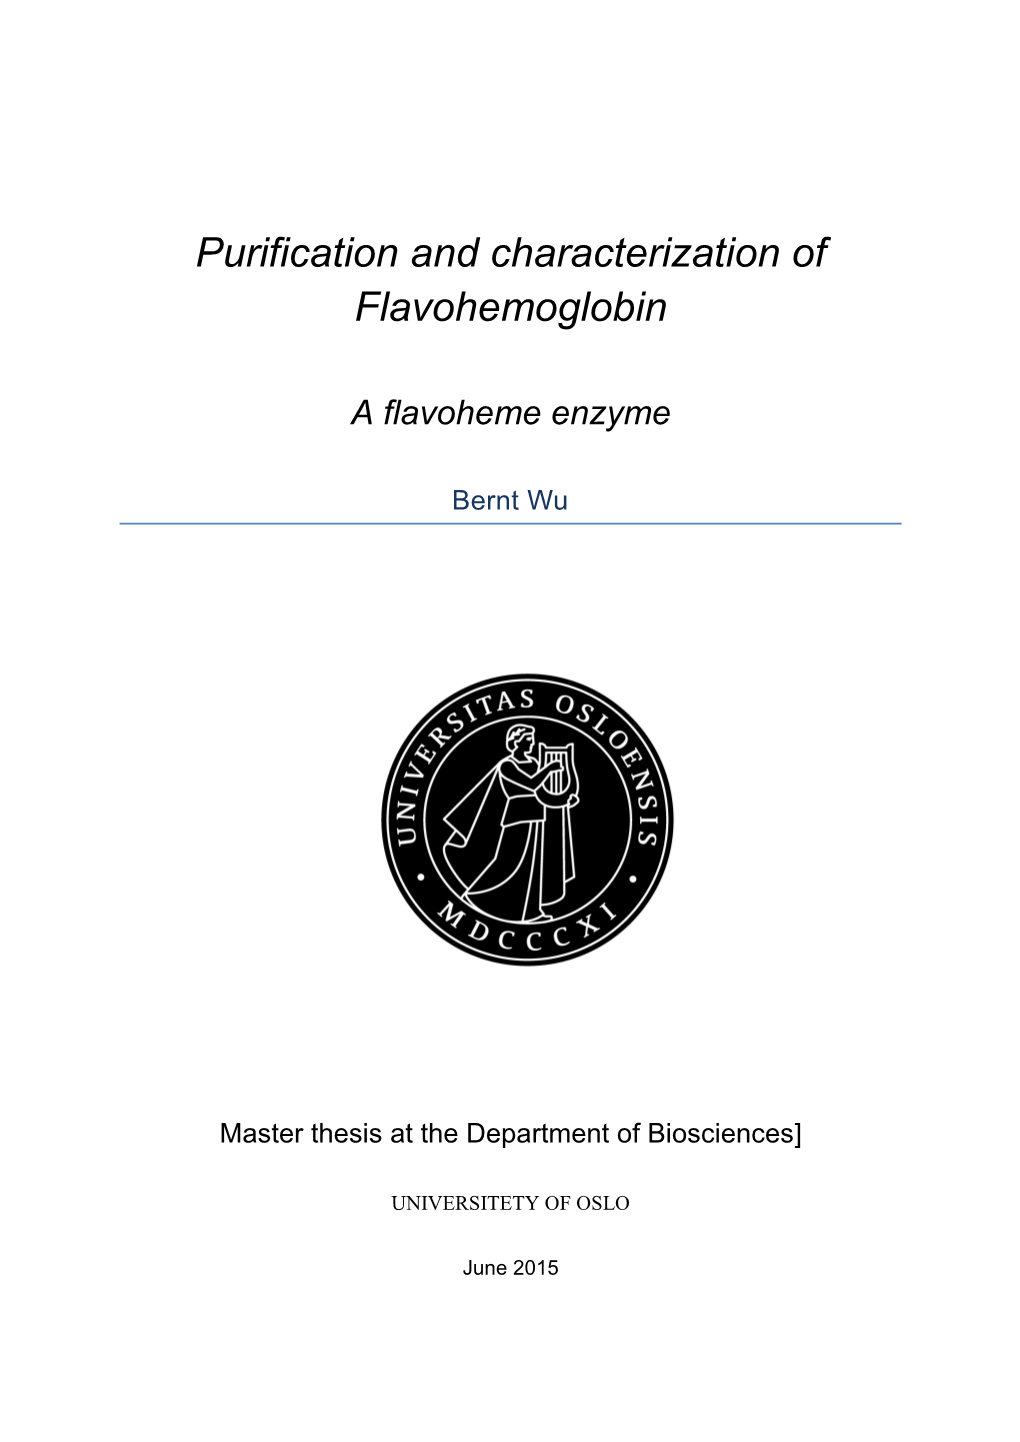 Purification and Characterization of Flavohemoglobin